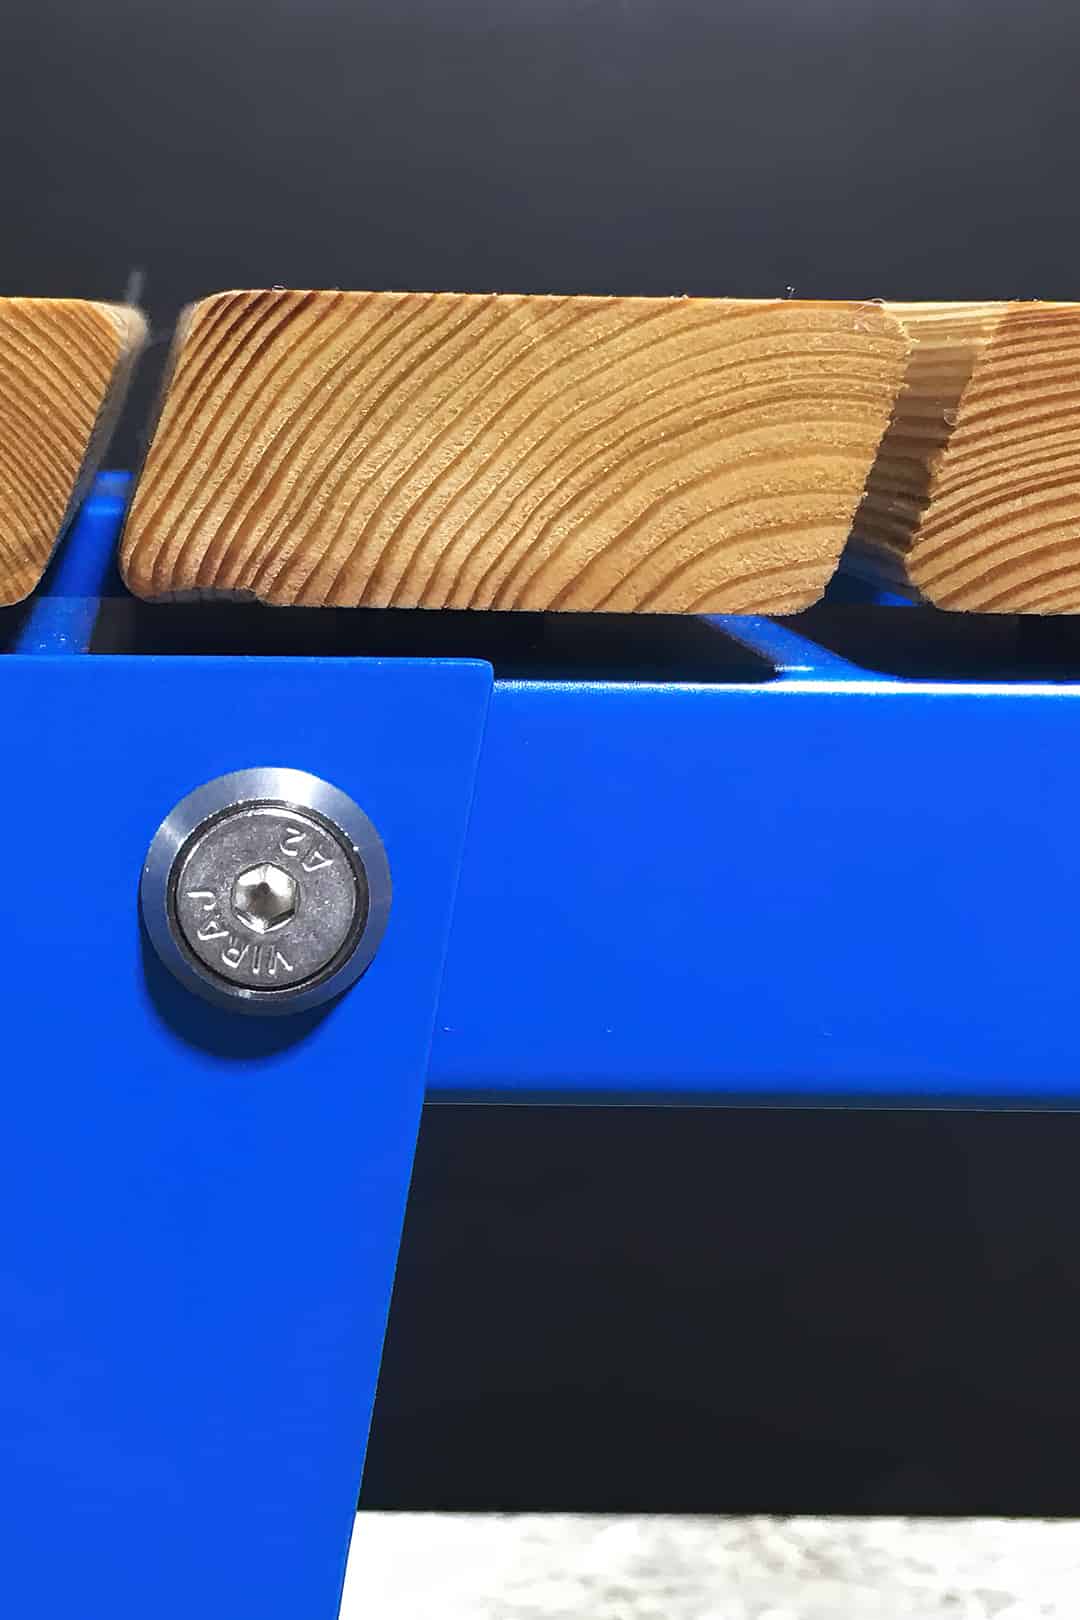 gartenbank-detail-holz-wetterfest-metall-bauen-modern-massiv-aluminium-alu-edelstahl-schraube-massivholz-cool-design-ohne-lehne-sibirische-laerche-lattung-blau-handmade-in-germany-stahlzart